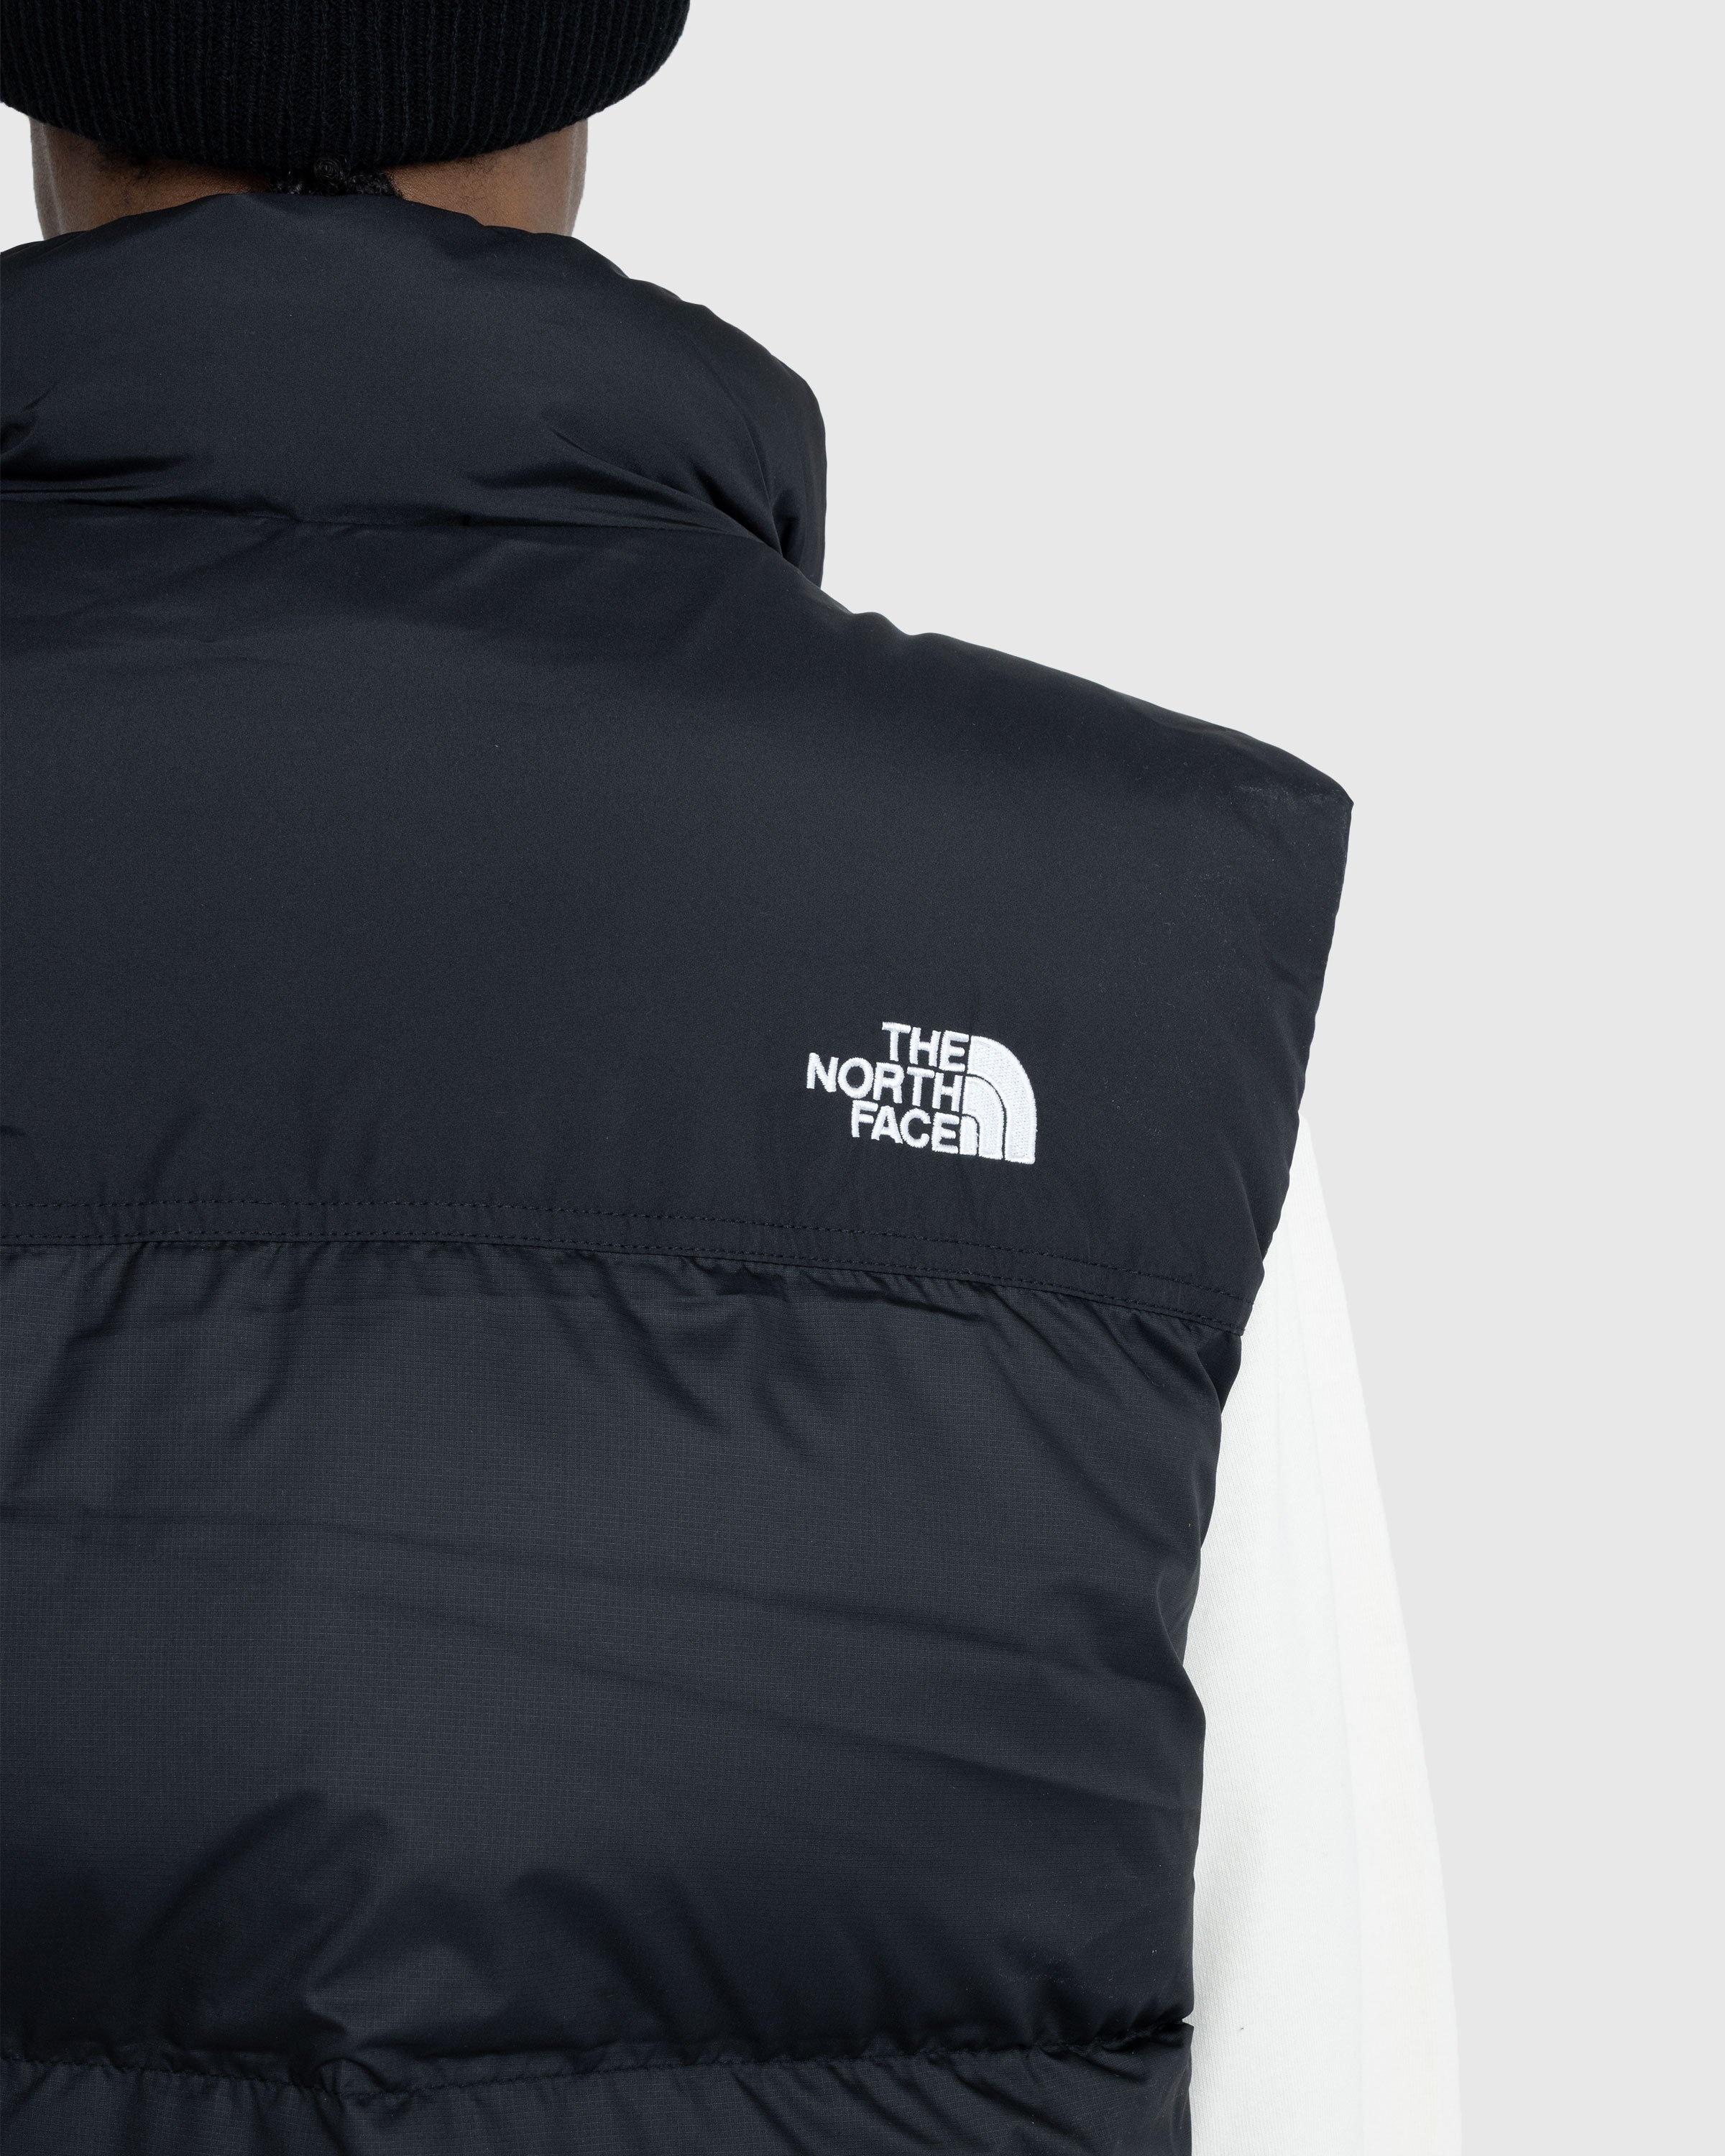 The North Face – Saikuru Vest TNF Black - Outerwear - Black - Image 5